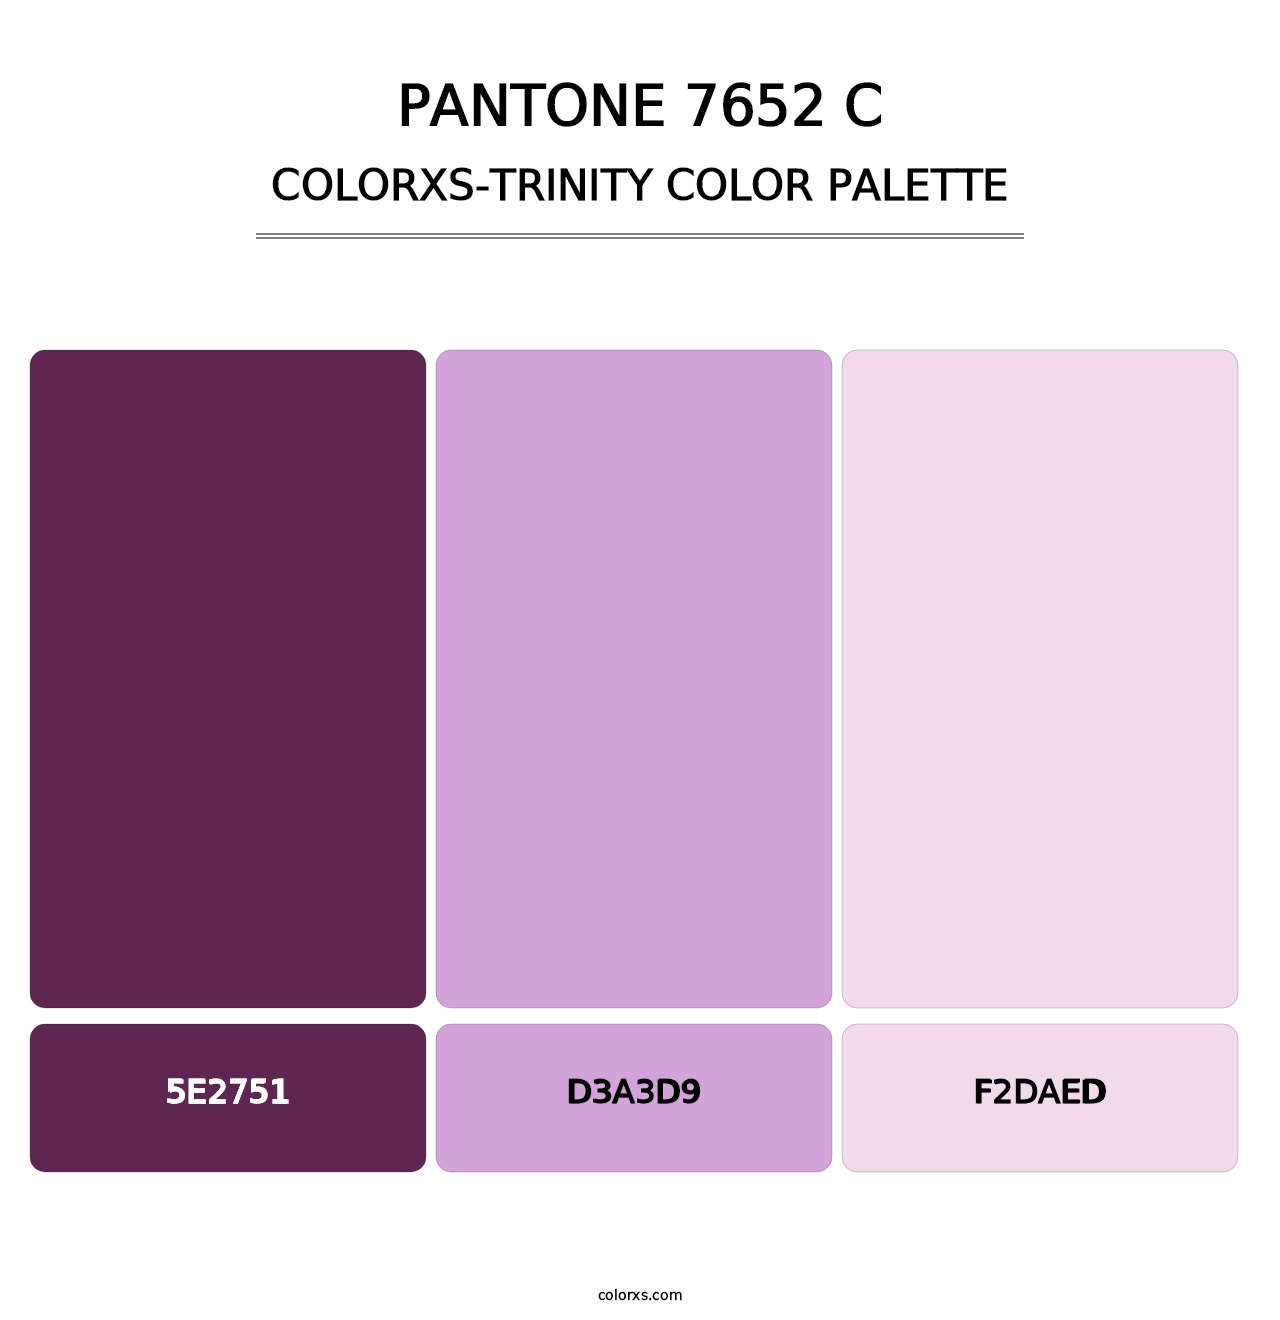 PANTONE 7652 C - Colorxs Trinity Palette